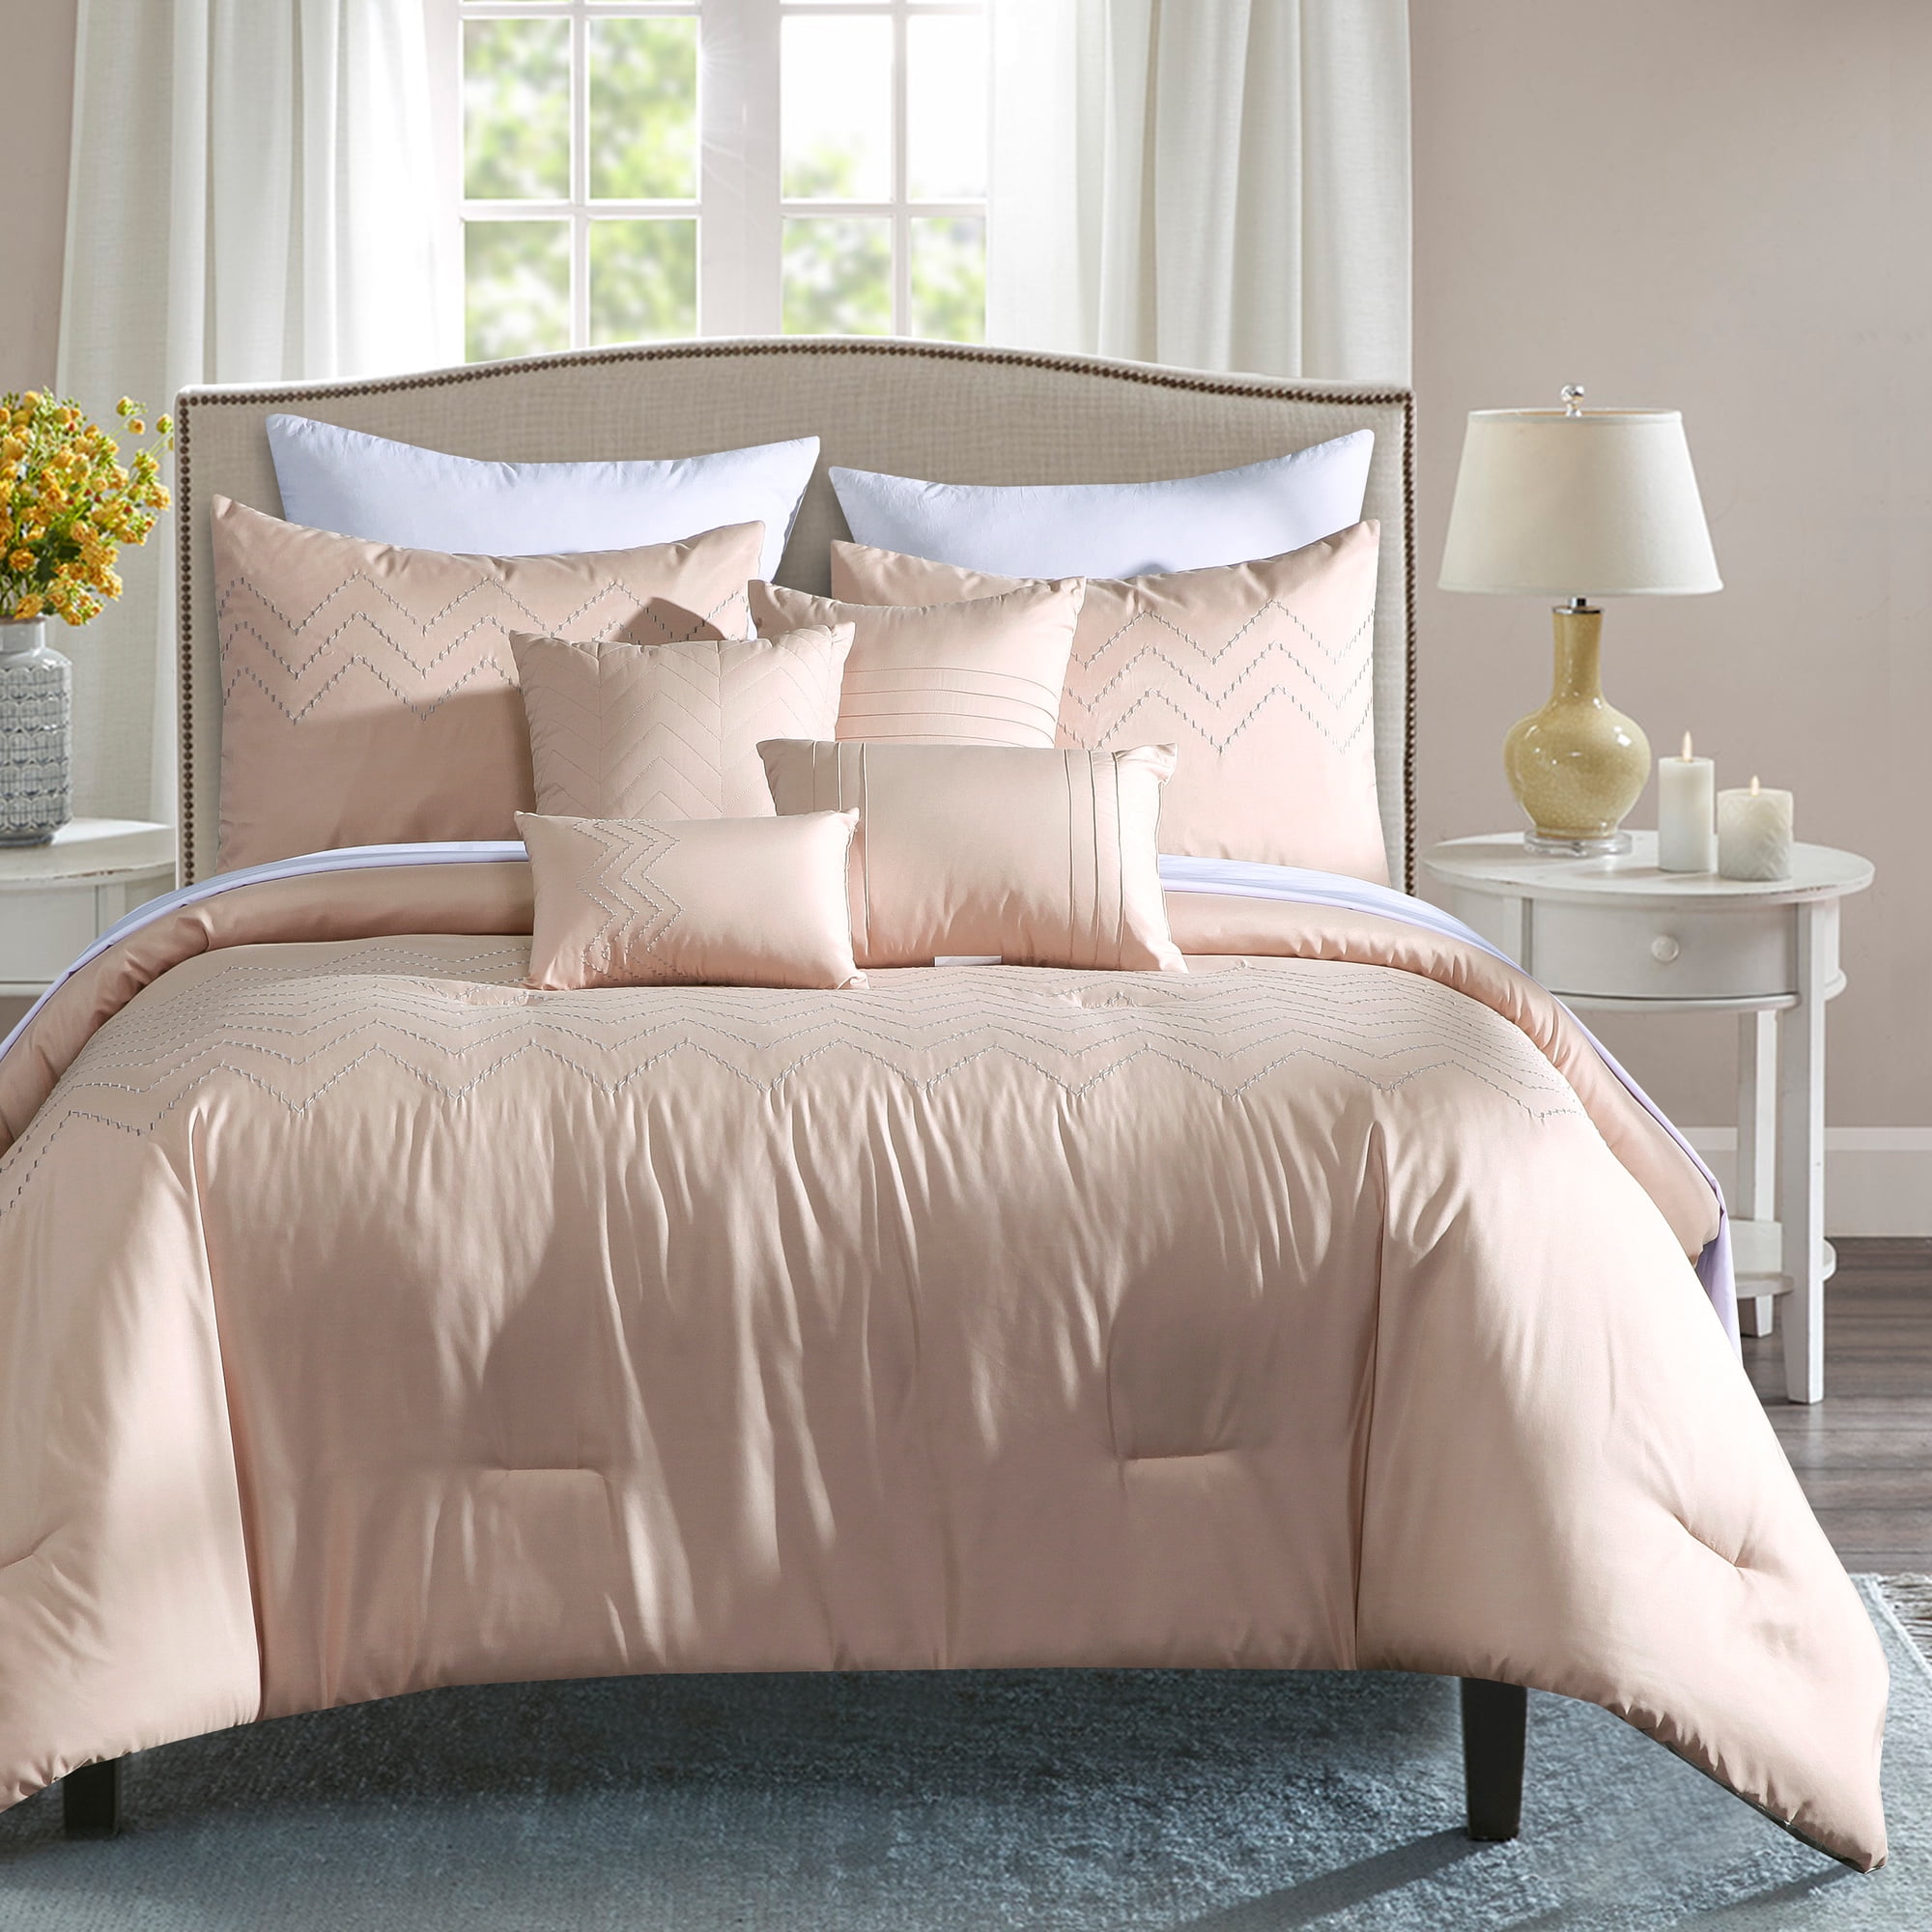 HGMart Bedding Comforter Set Bed In A Bag 7 Piece Luxury Embroidery Microfiber Bedding Sets